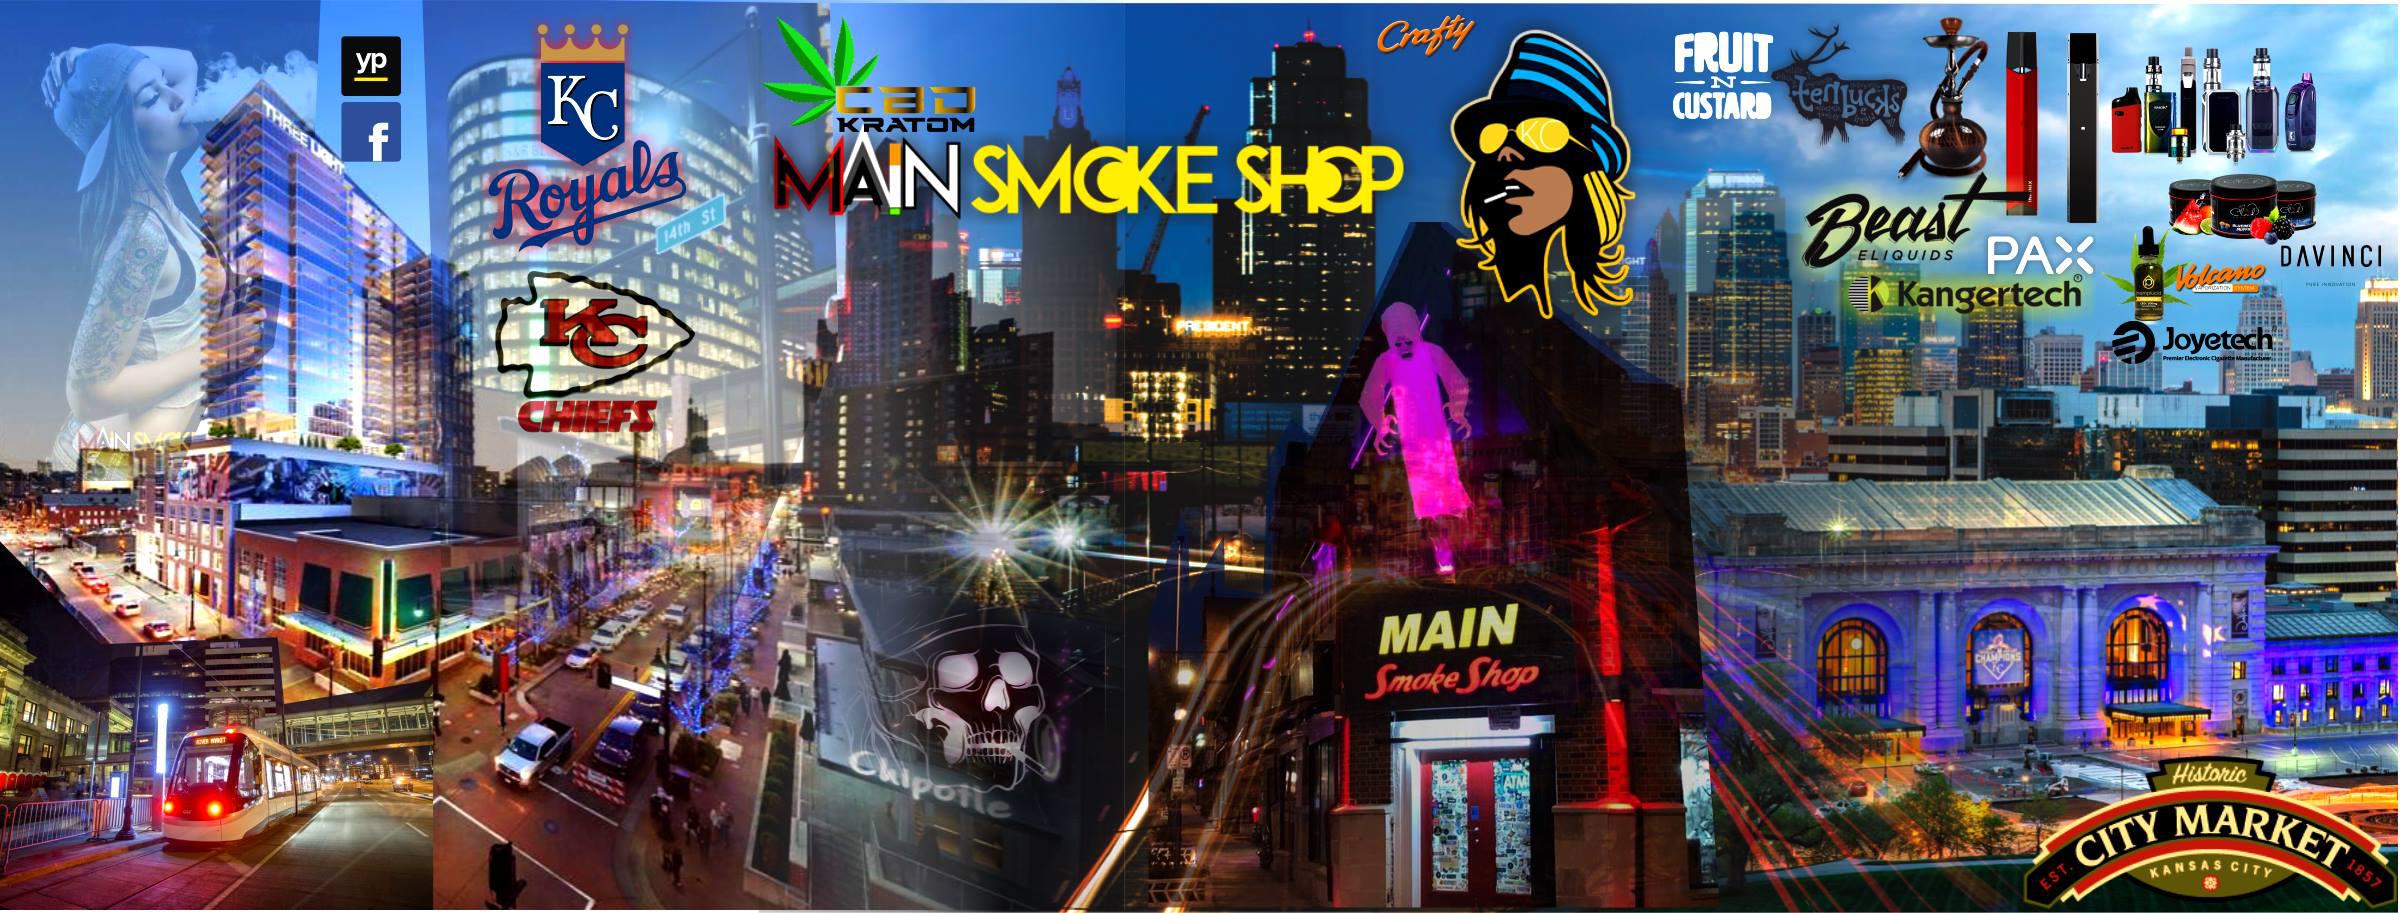 Main Smoke Shop KC | Vape Shop | Kratom & CBD Store Photo